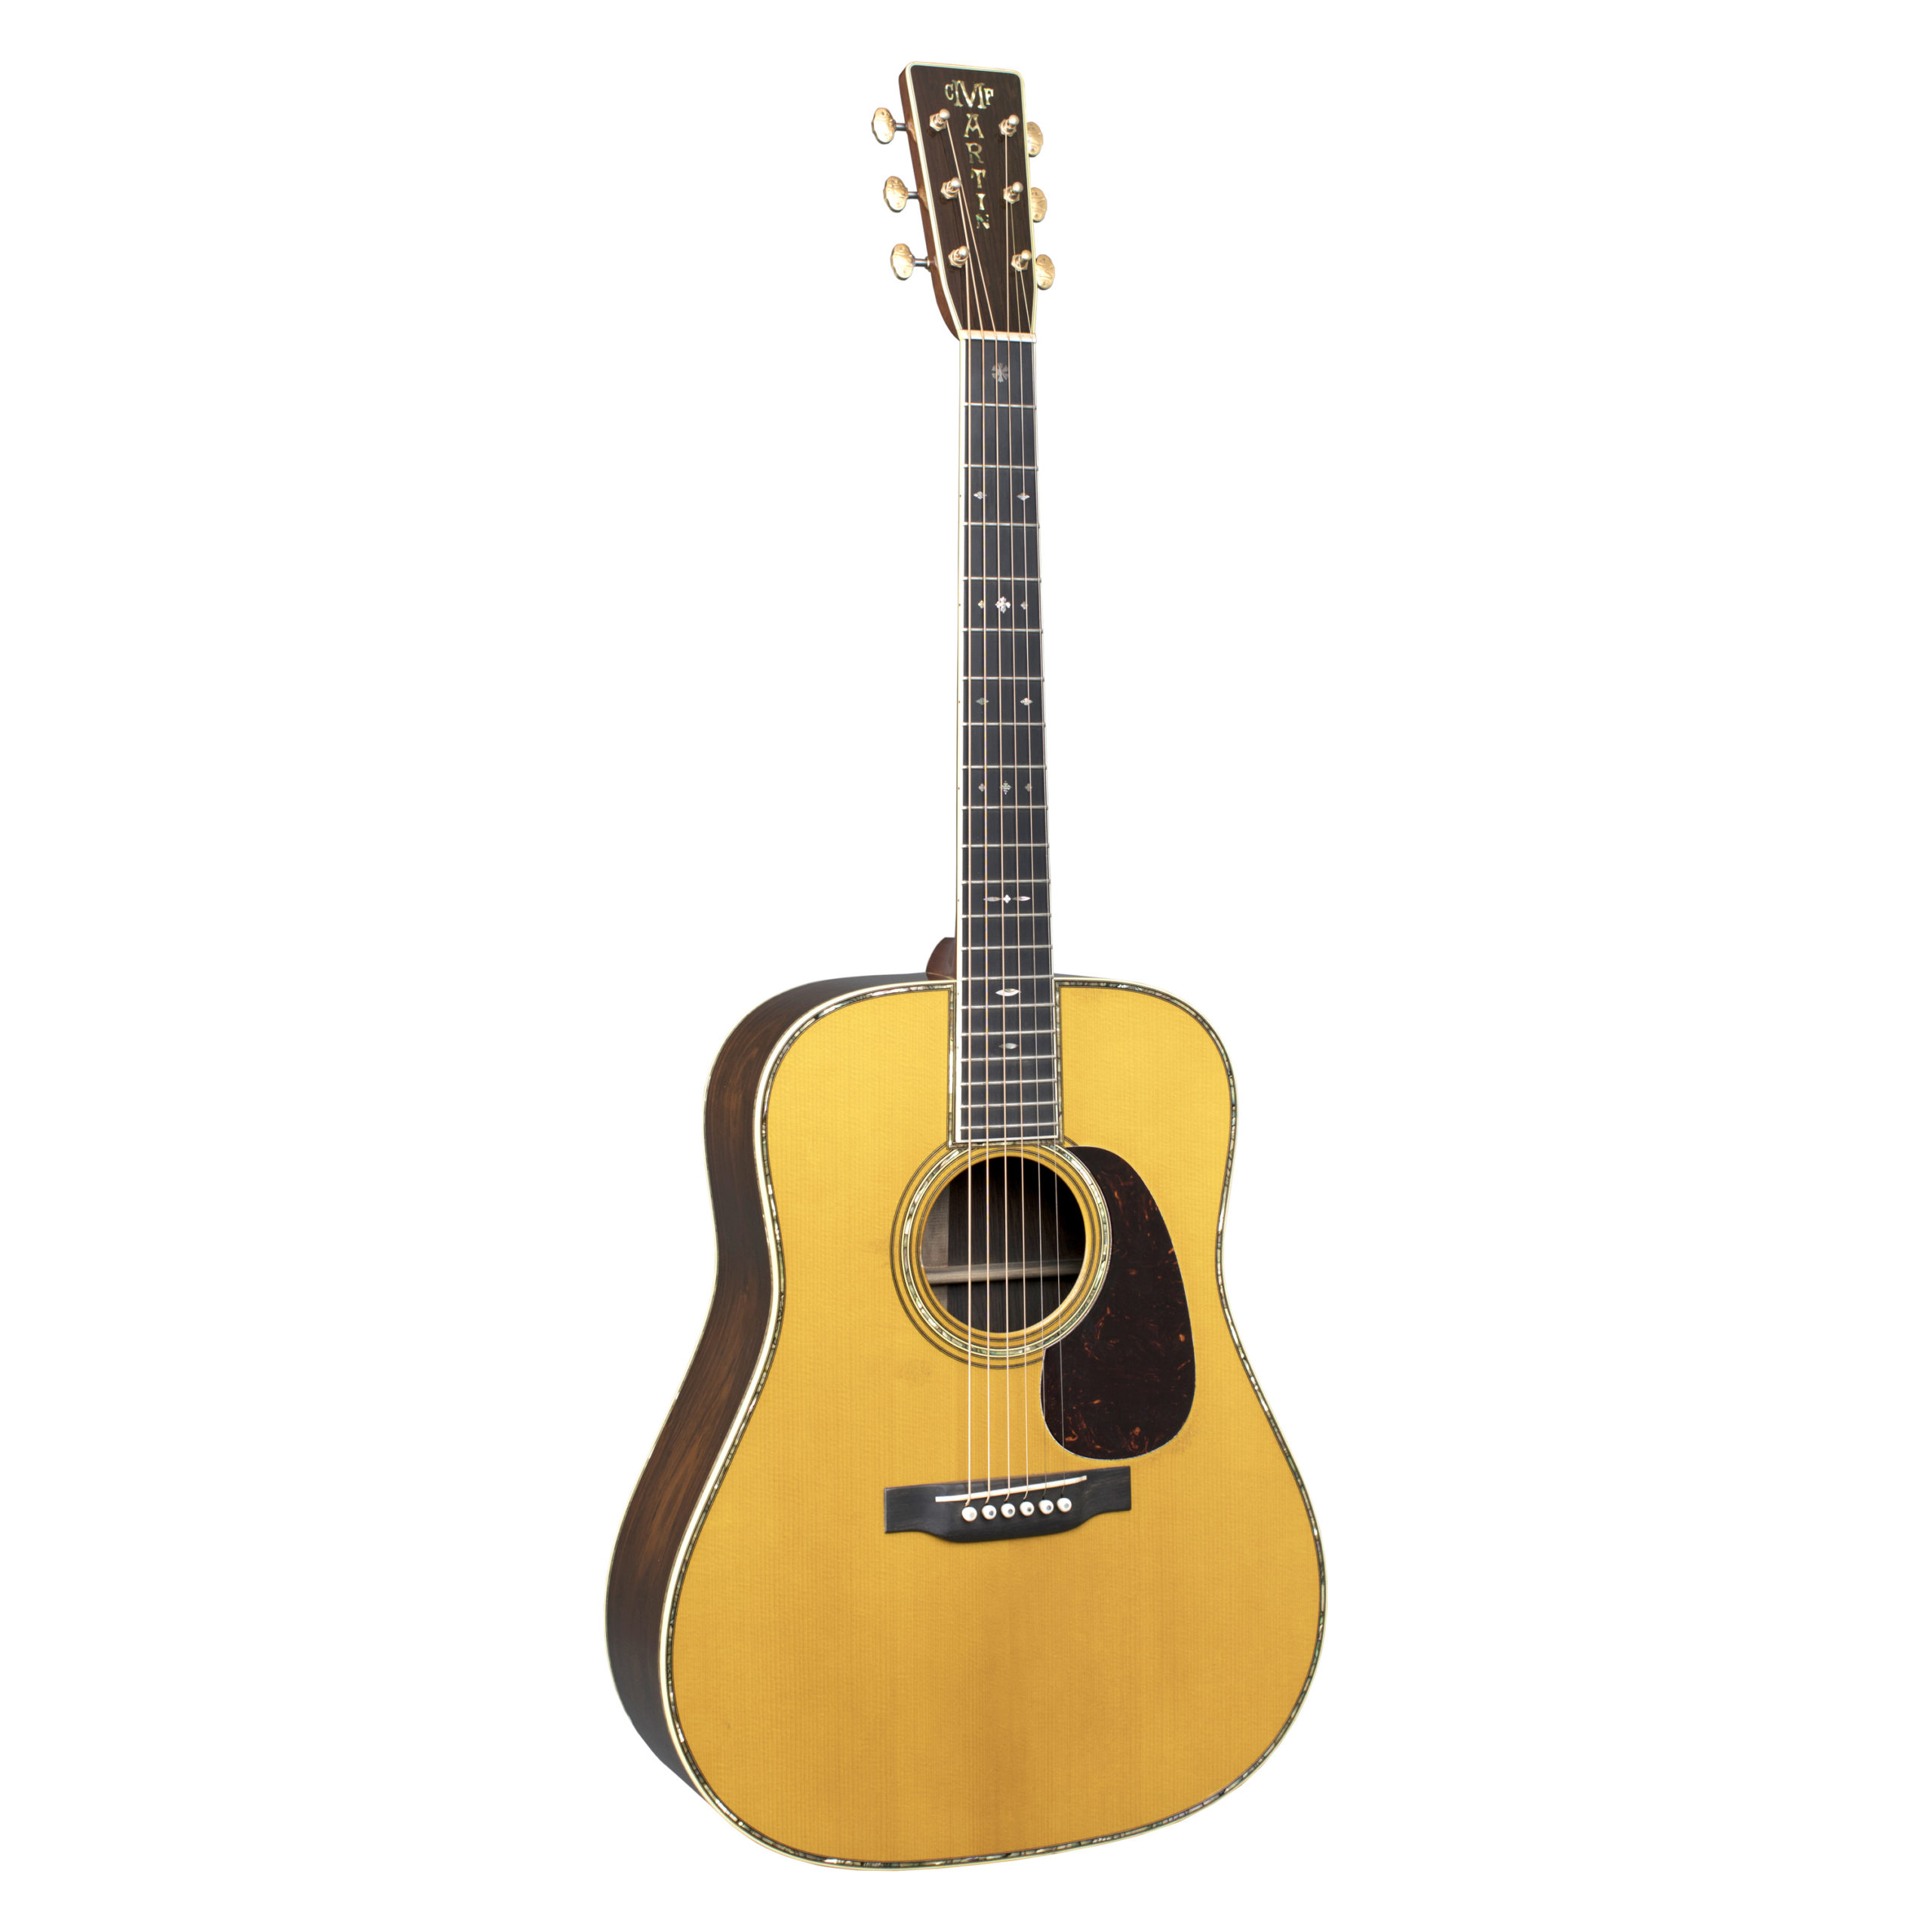 C.F. Martin Acoustic Guitar Sale! - Jim Laabs Music Store